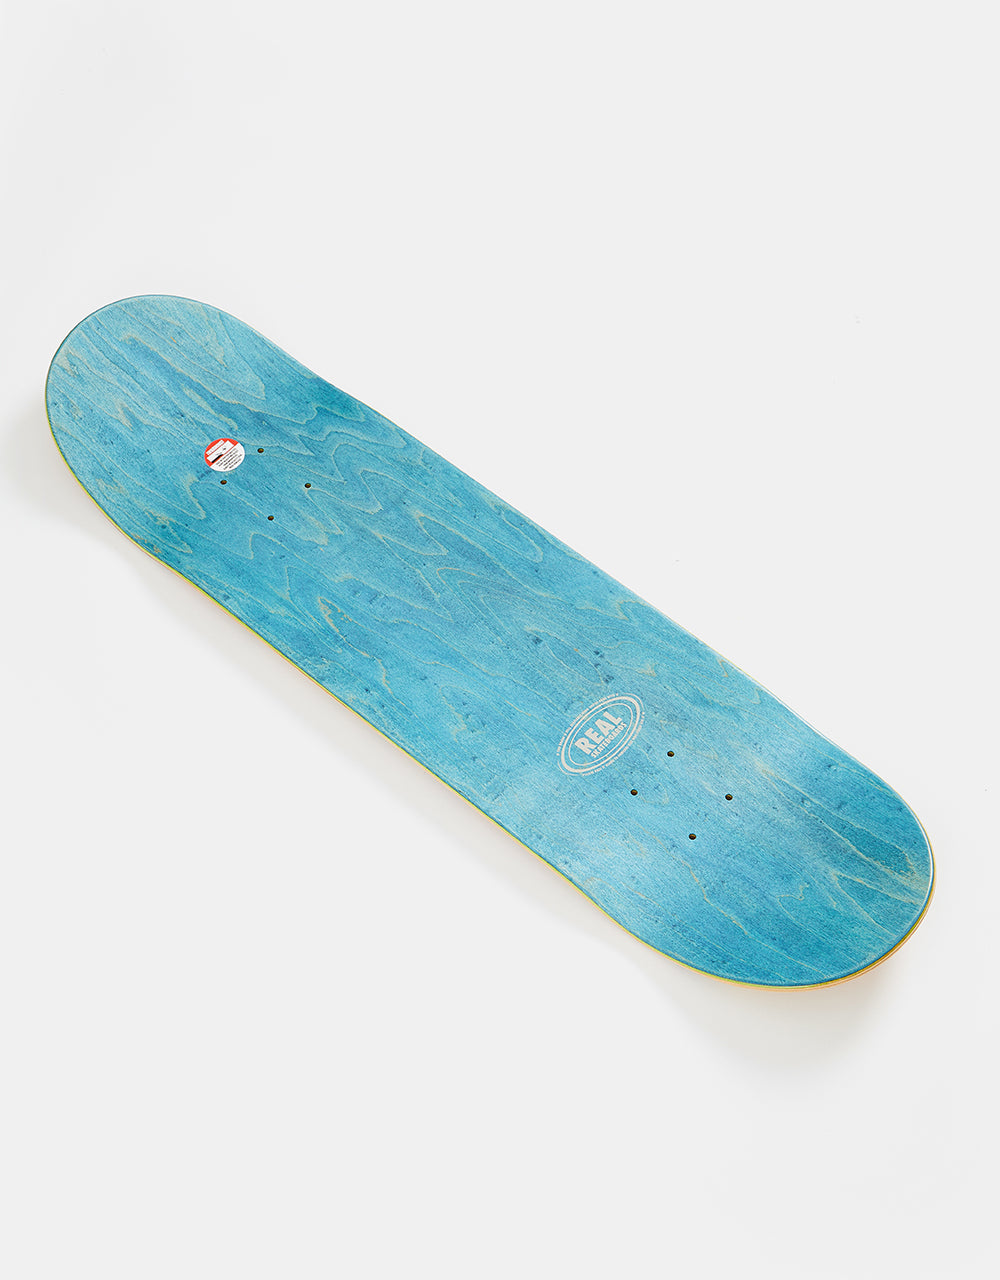 Real Praman One Off Ltd Skateboard Deck - 8.38"